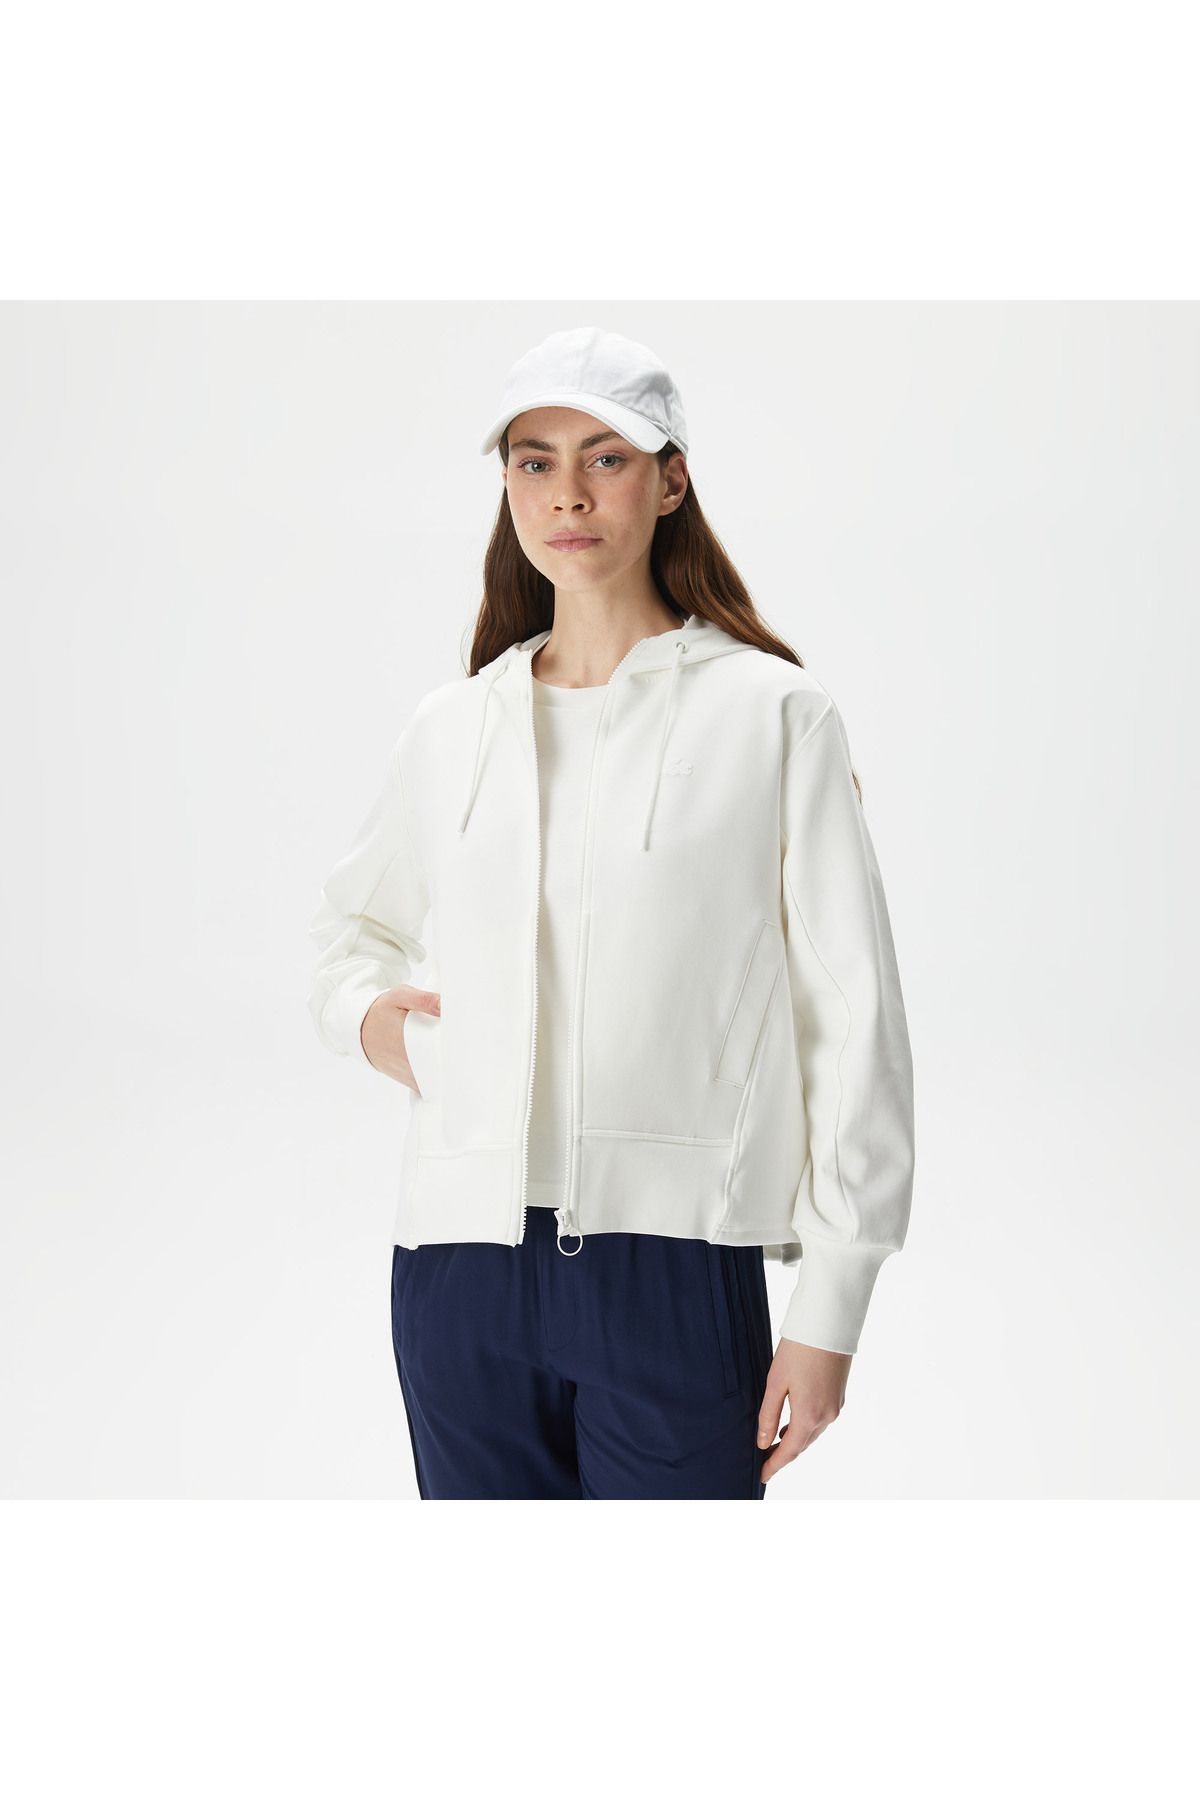 Lacoste پیراهن سفید با روکش معمولی زنانه